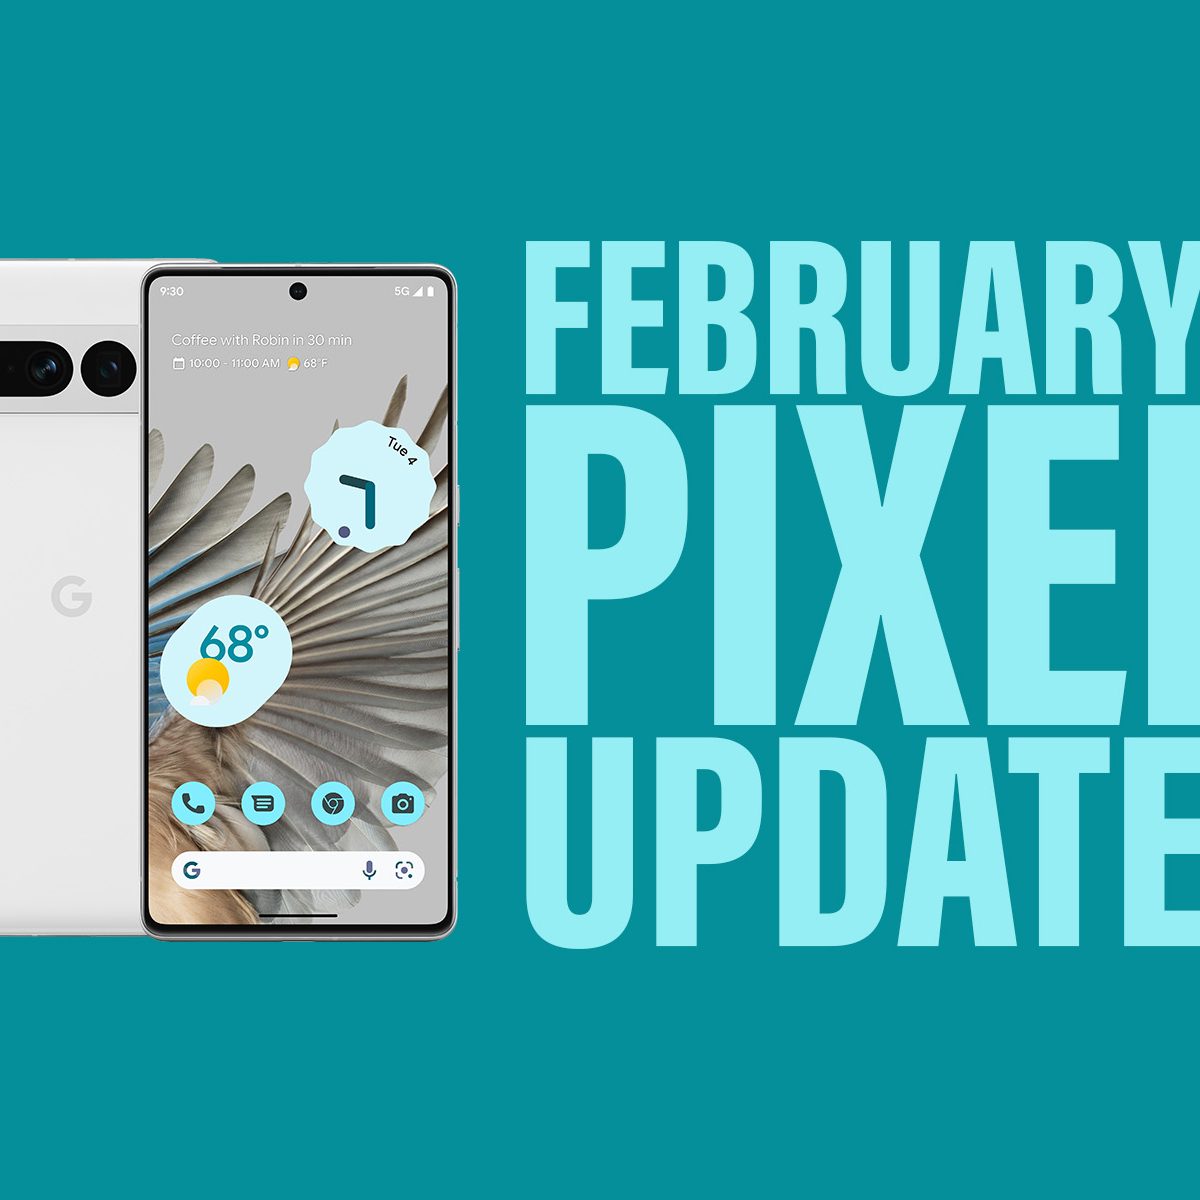 Pixel Piece Codes [Update 1] (February 2023)